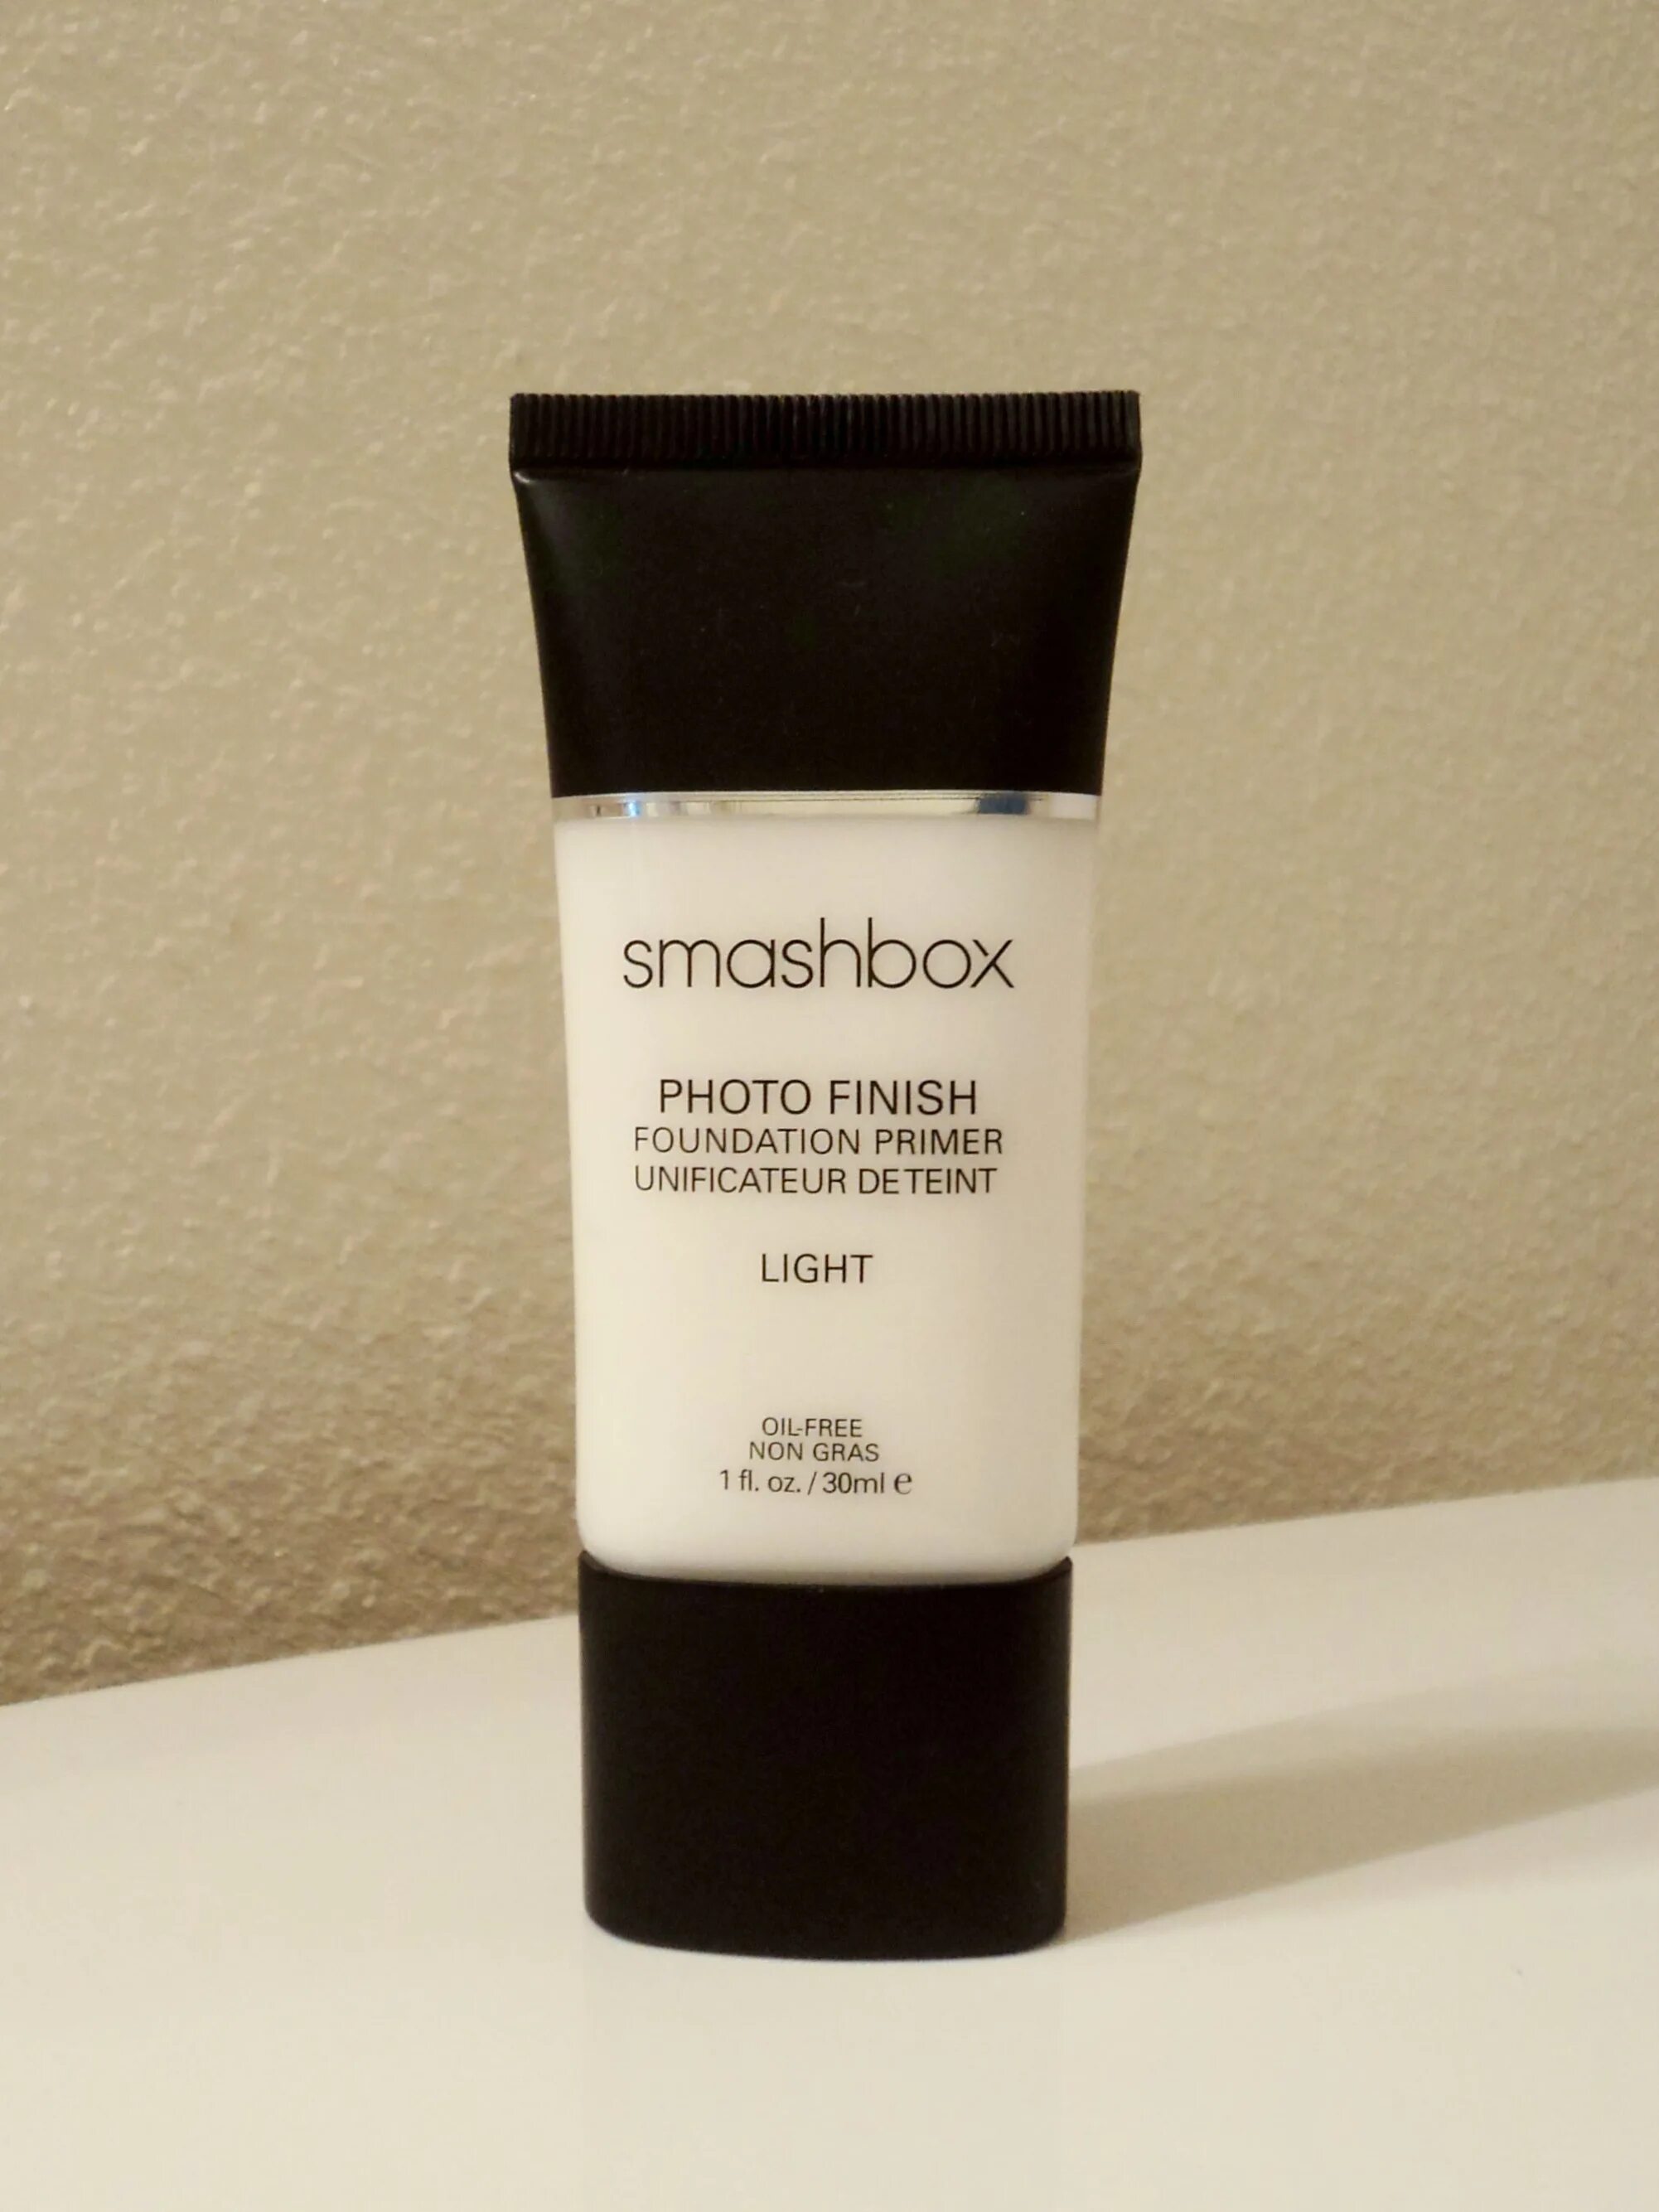 Smashbox праймер. Smashbox фотофиниш праймер. Smashbox праймер пробник. Smashbox праймер photo finish super Light.